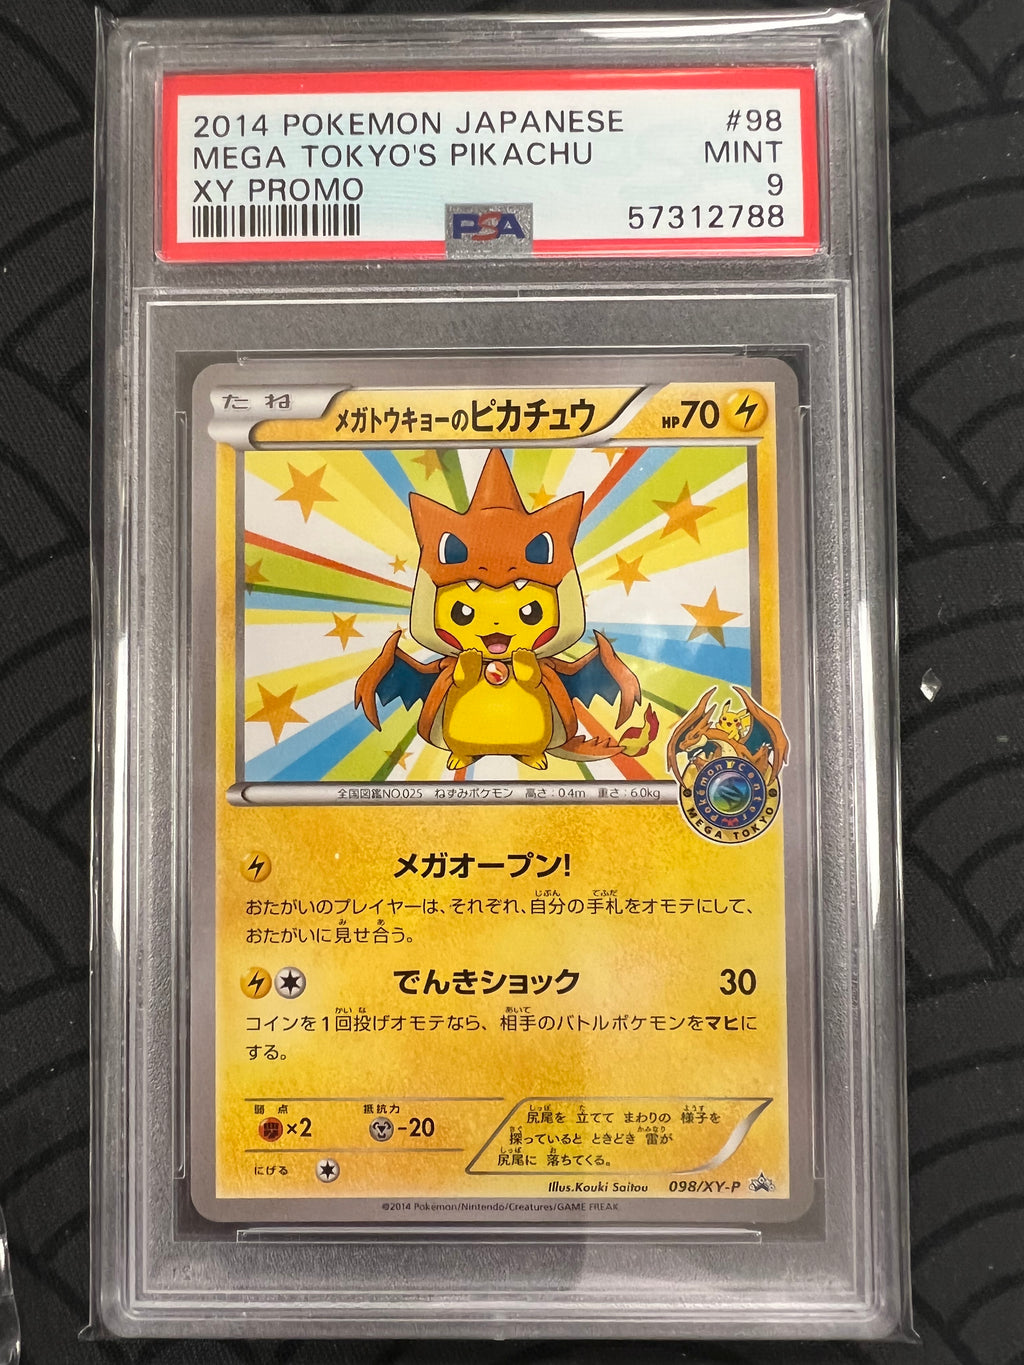 2014 Pokemon Japanese Mega Tokyo's Pikachu (XY Promo) - GRADED - PSA 9